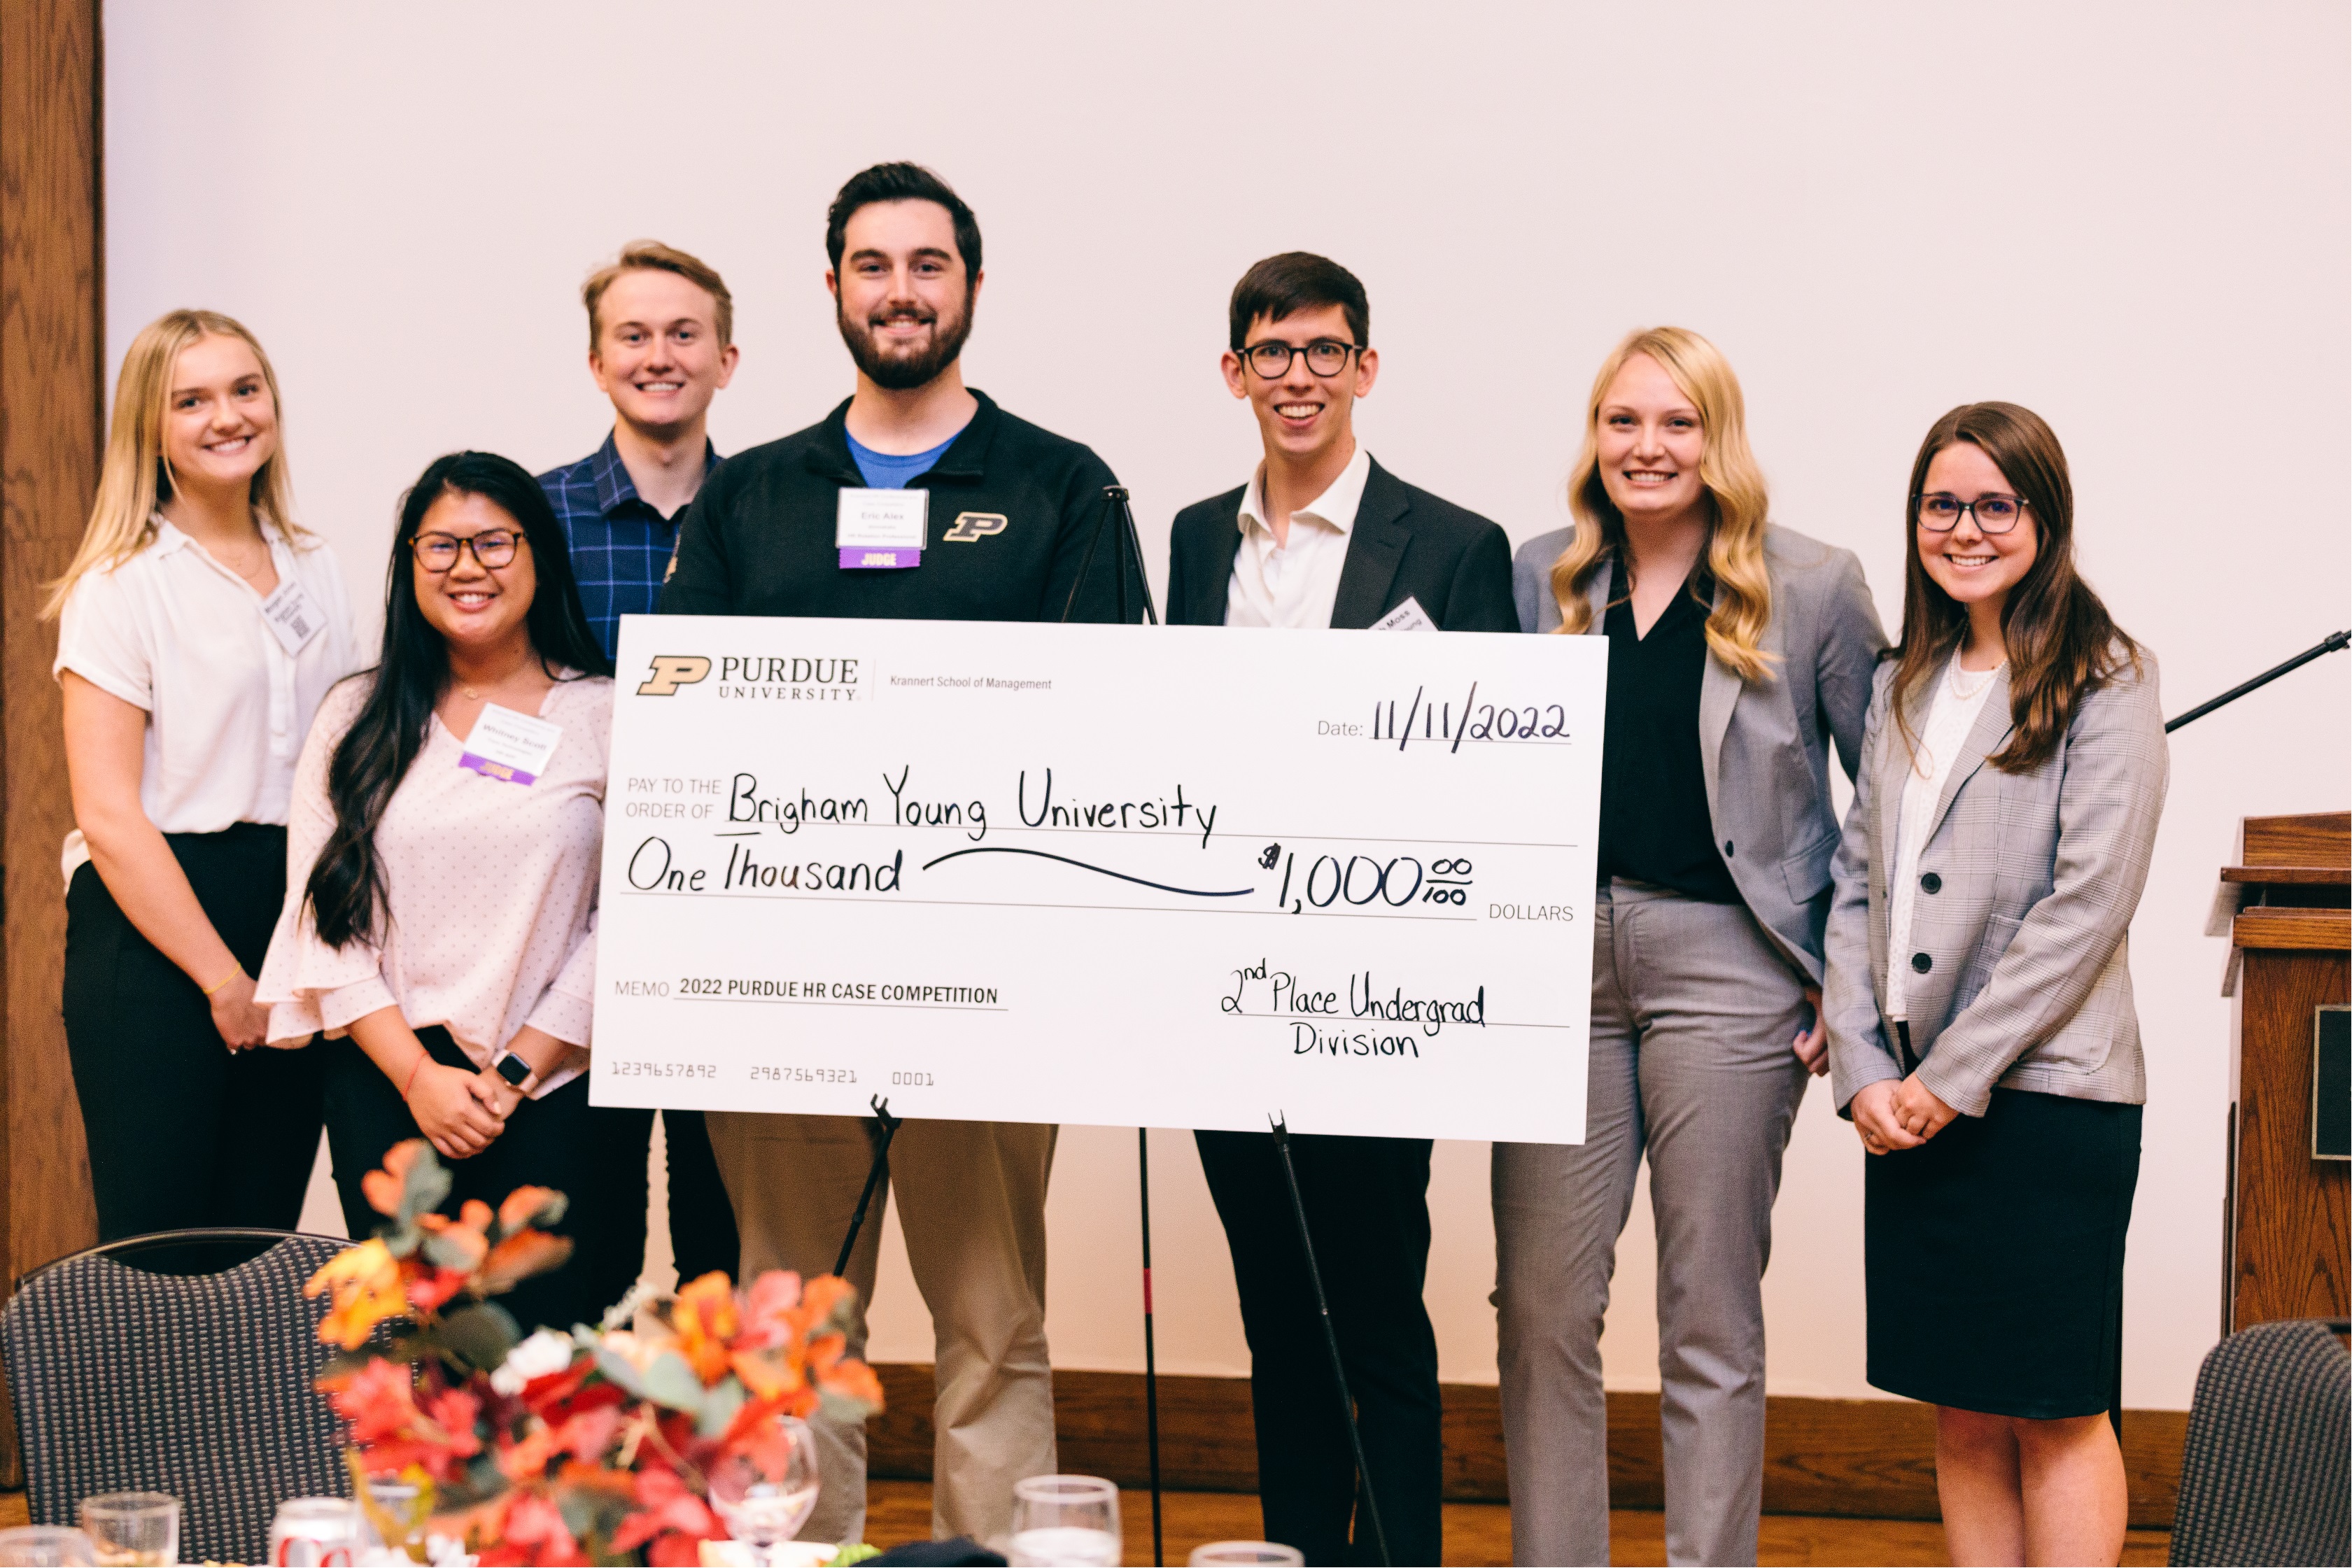 2nd Place Undergrad Winners - Brigham Young University